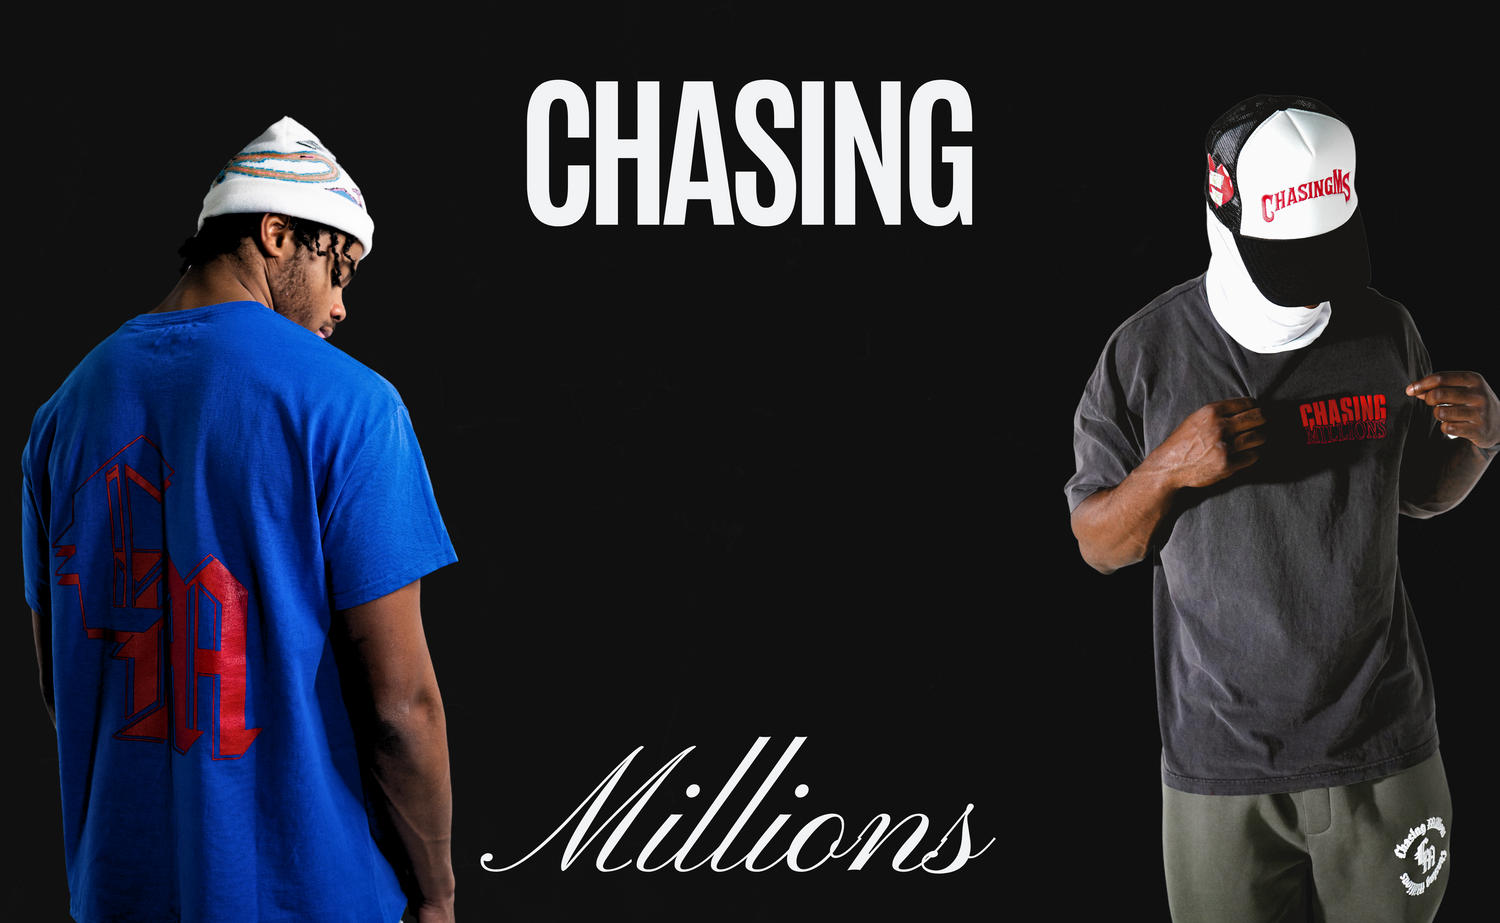 Chasing Millions